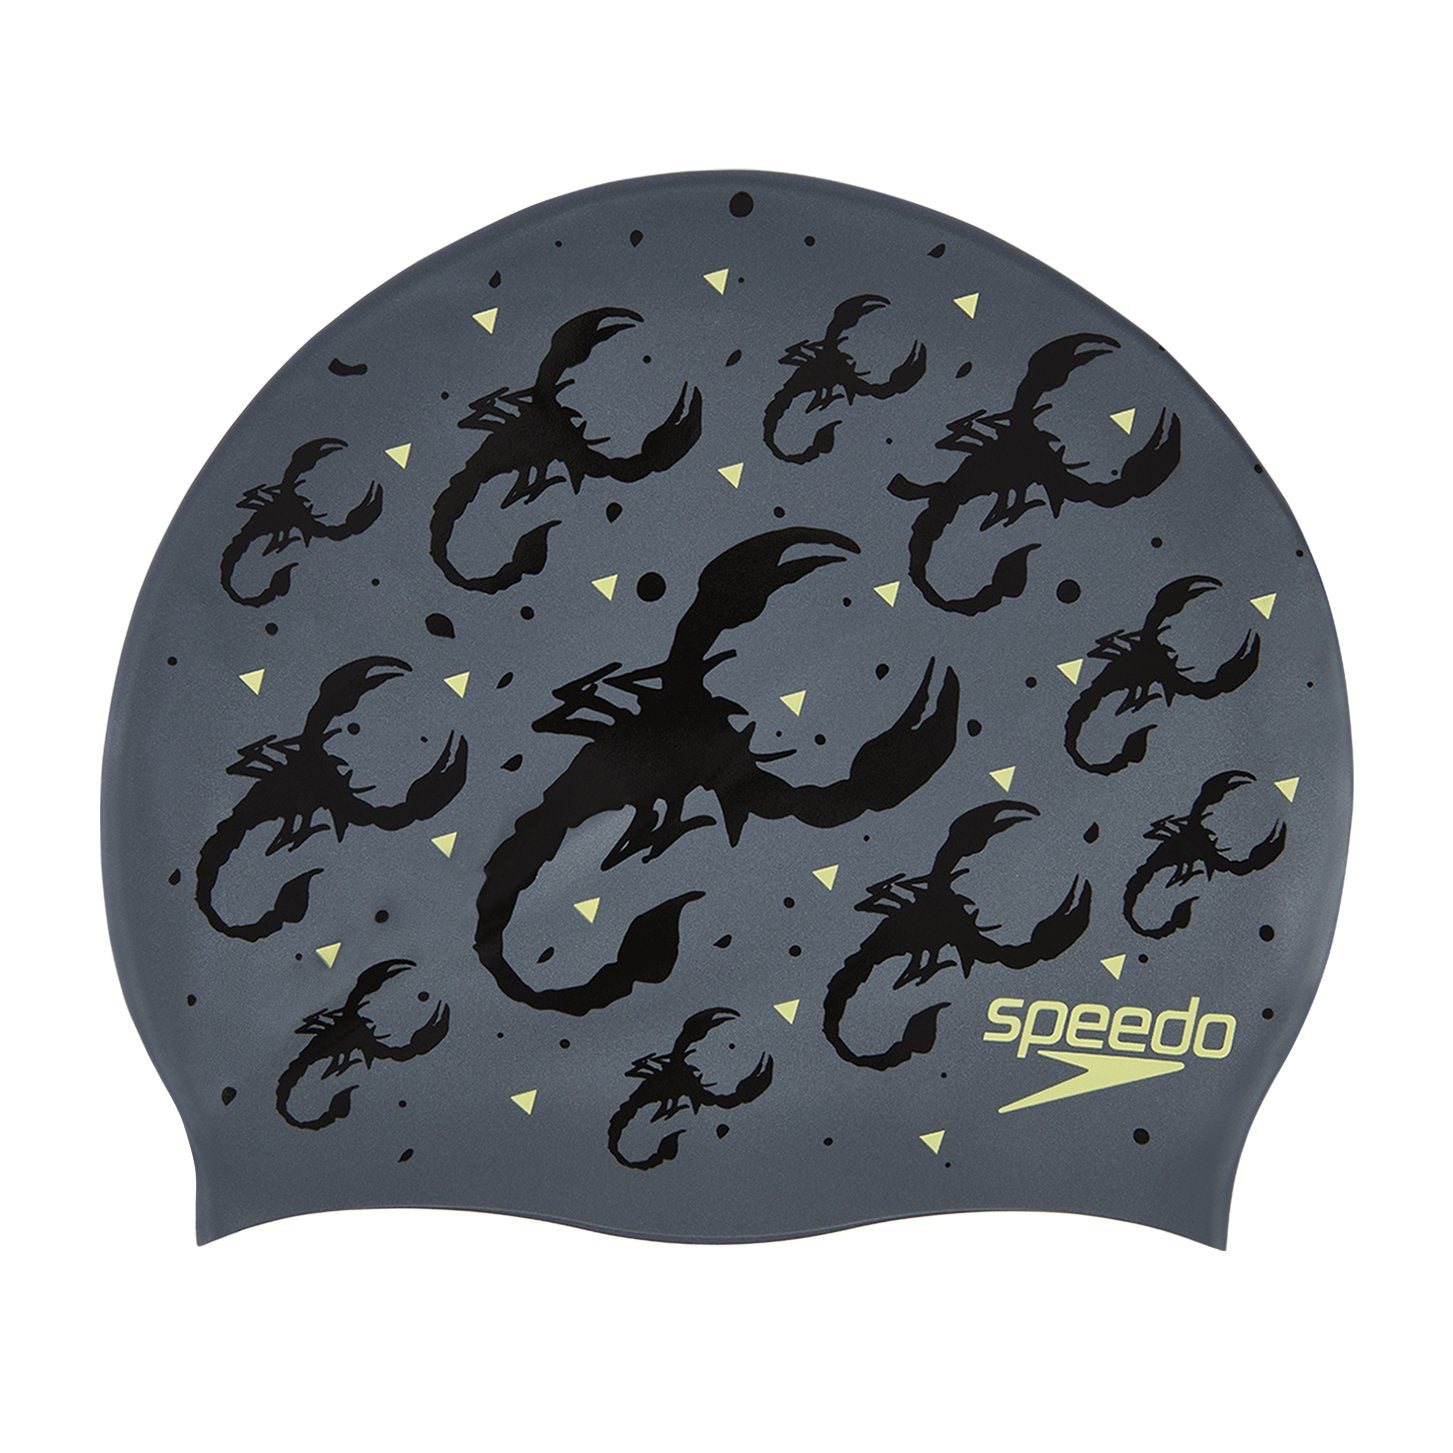 Speedo Slogan Print Swimming Cap, Free Size (Grey/Black) - Best Price online Prokicksports.com